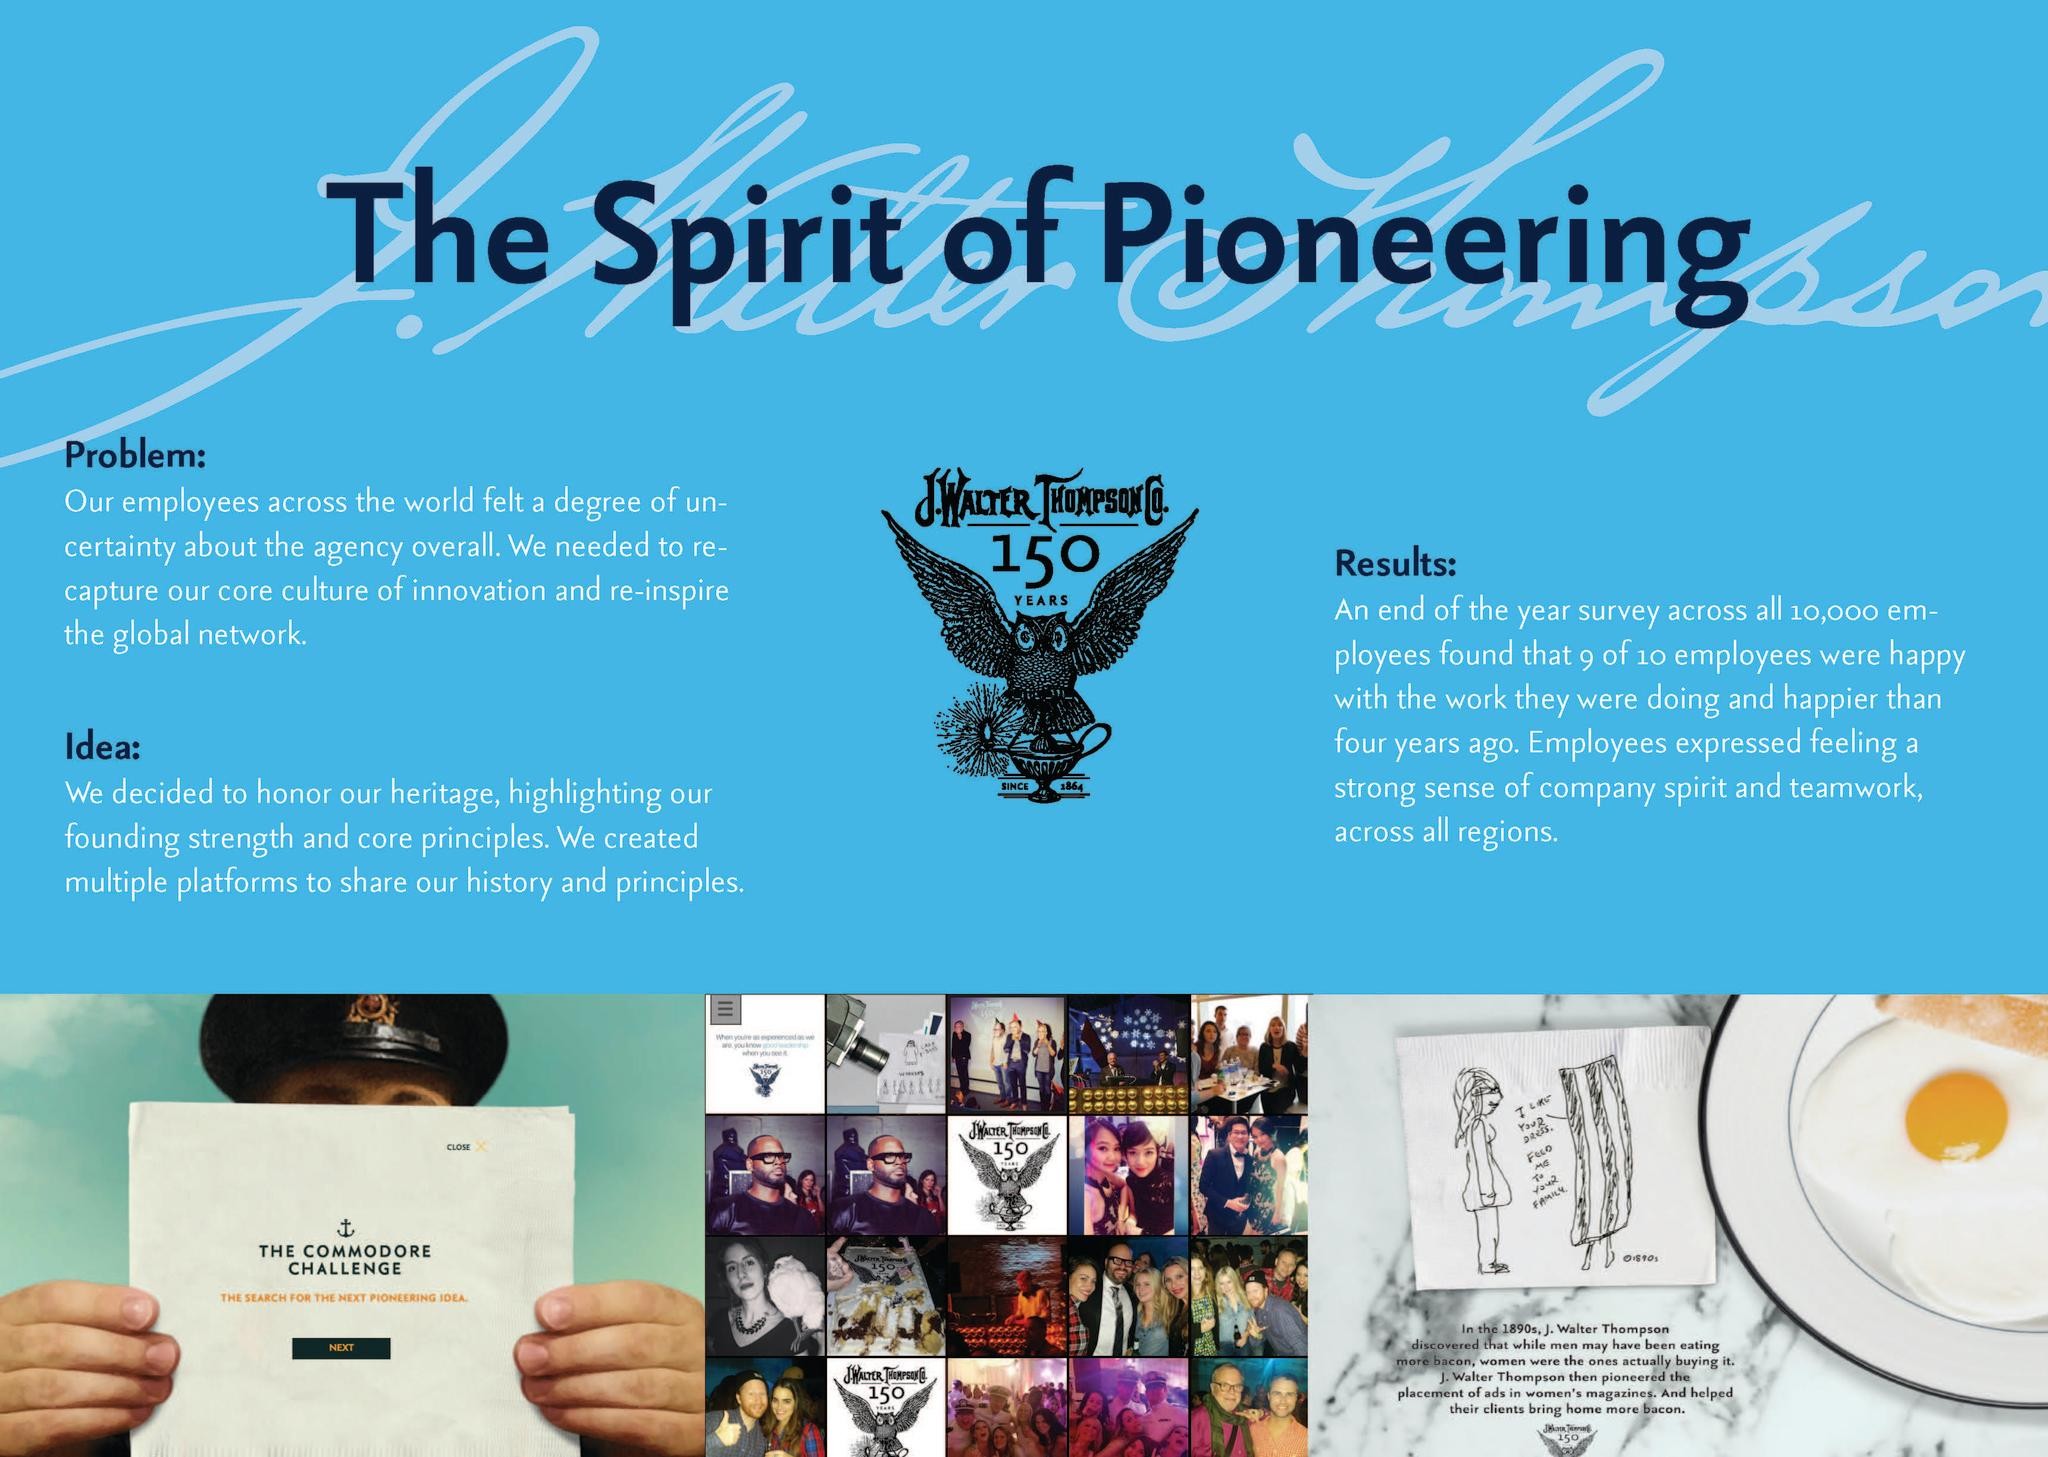 THE SPIRIT OF PIONEERING